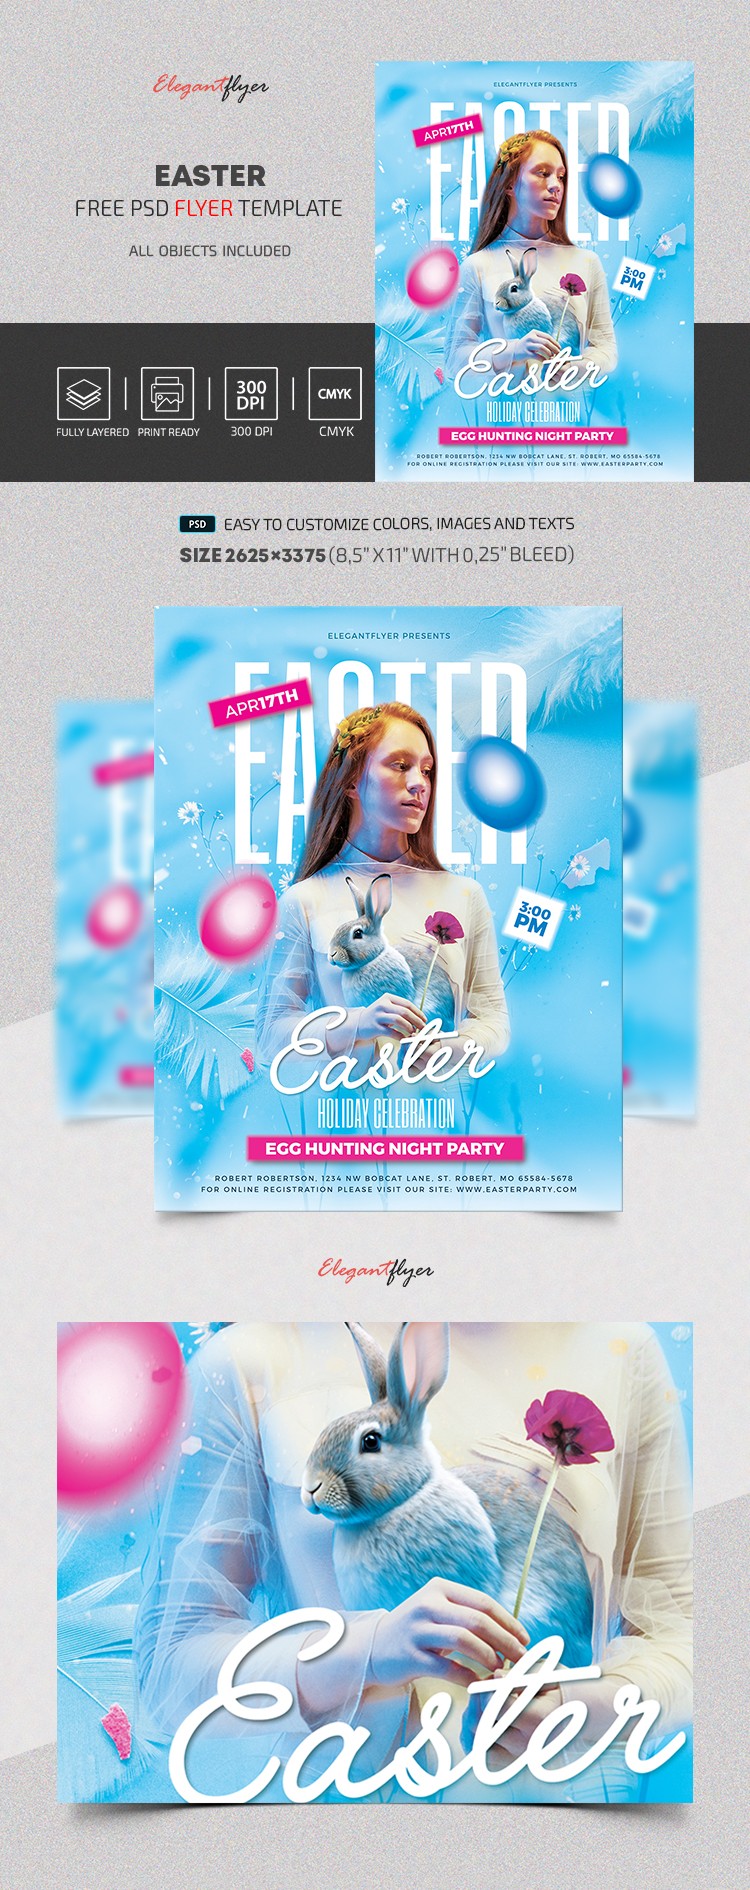 Easter - Free Flyer PSD Template by ElegantFlyer